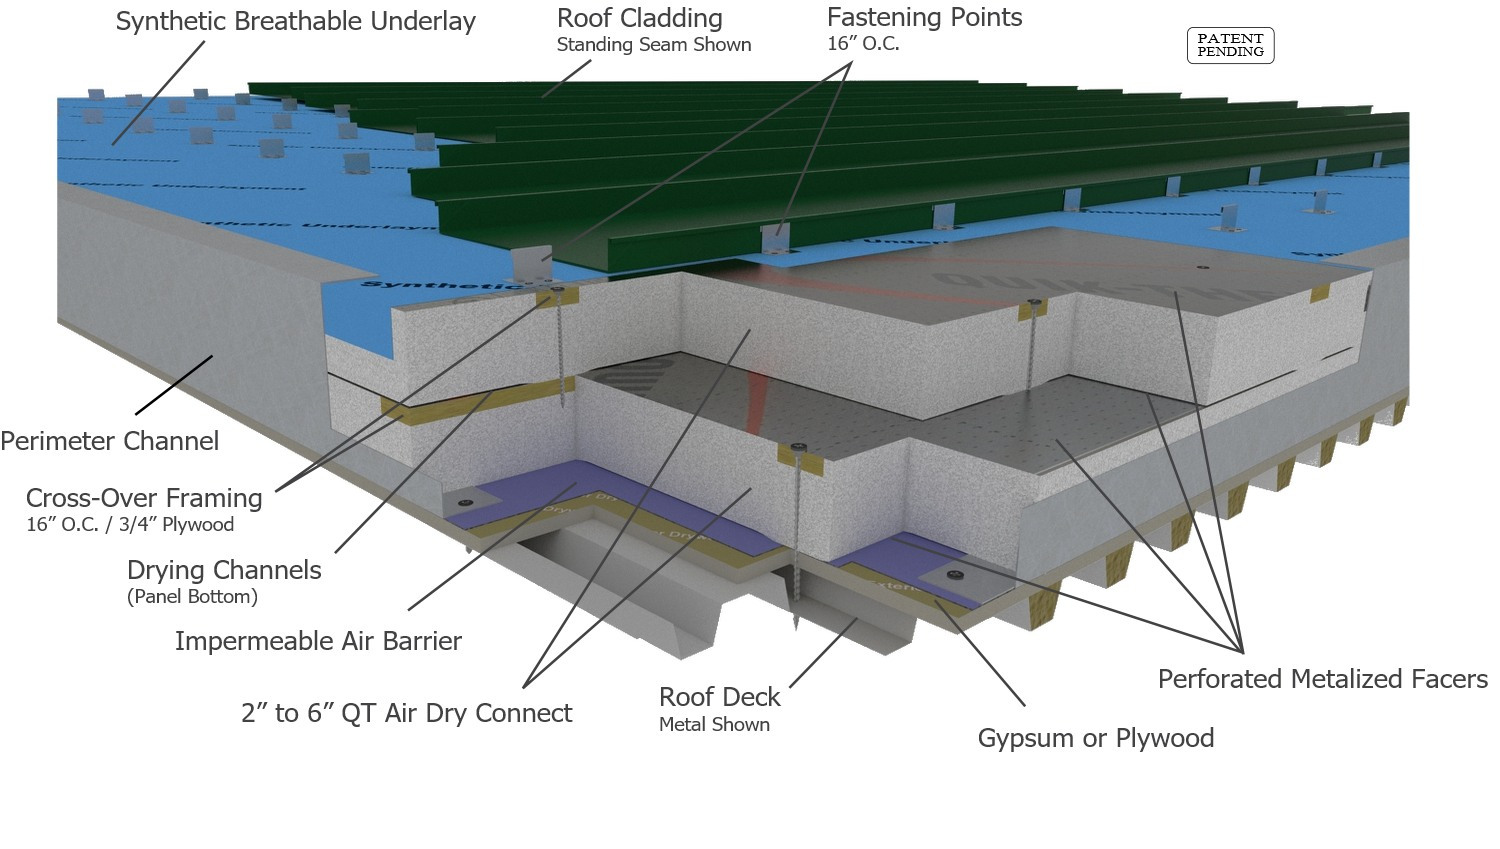 Internal roof insulation panels